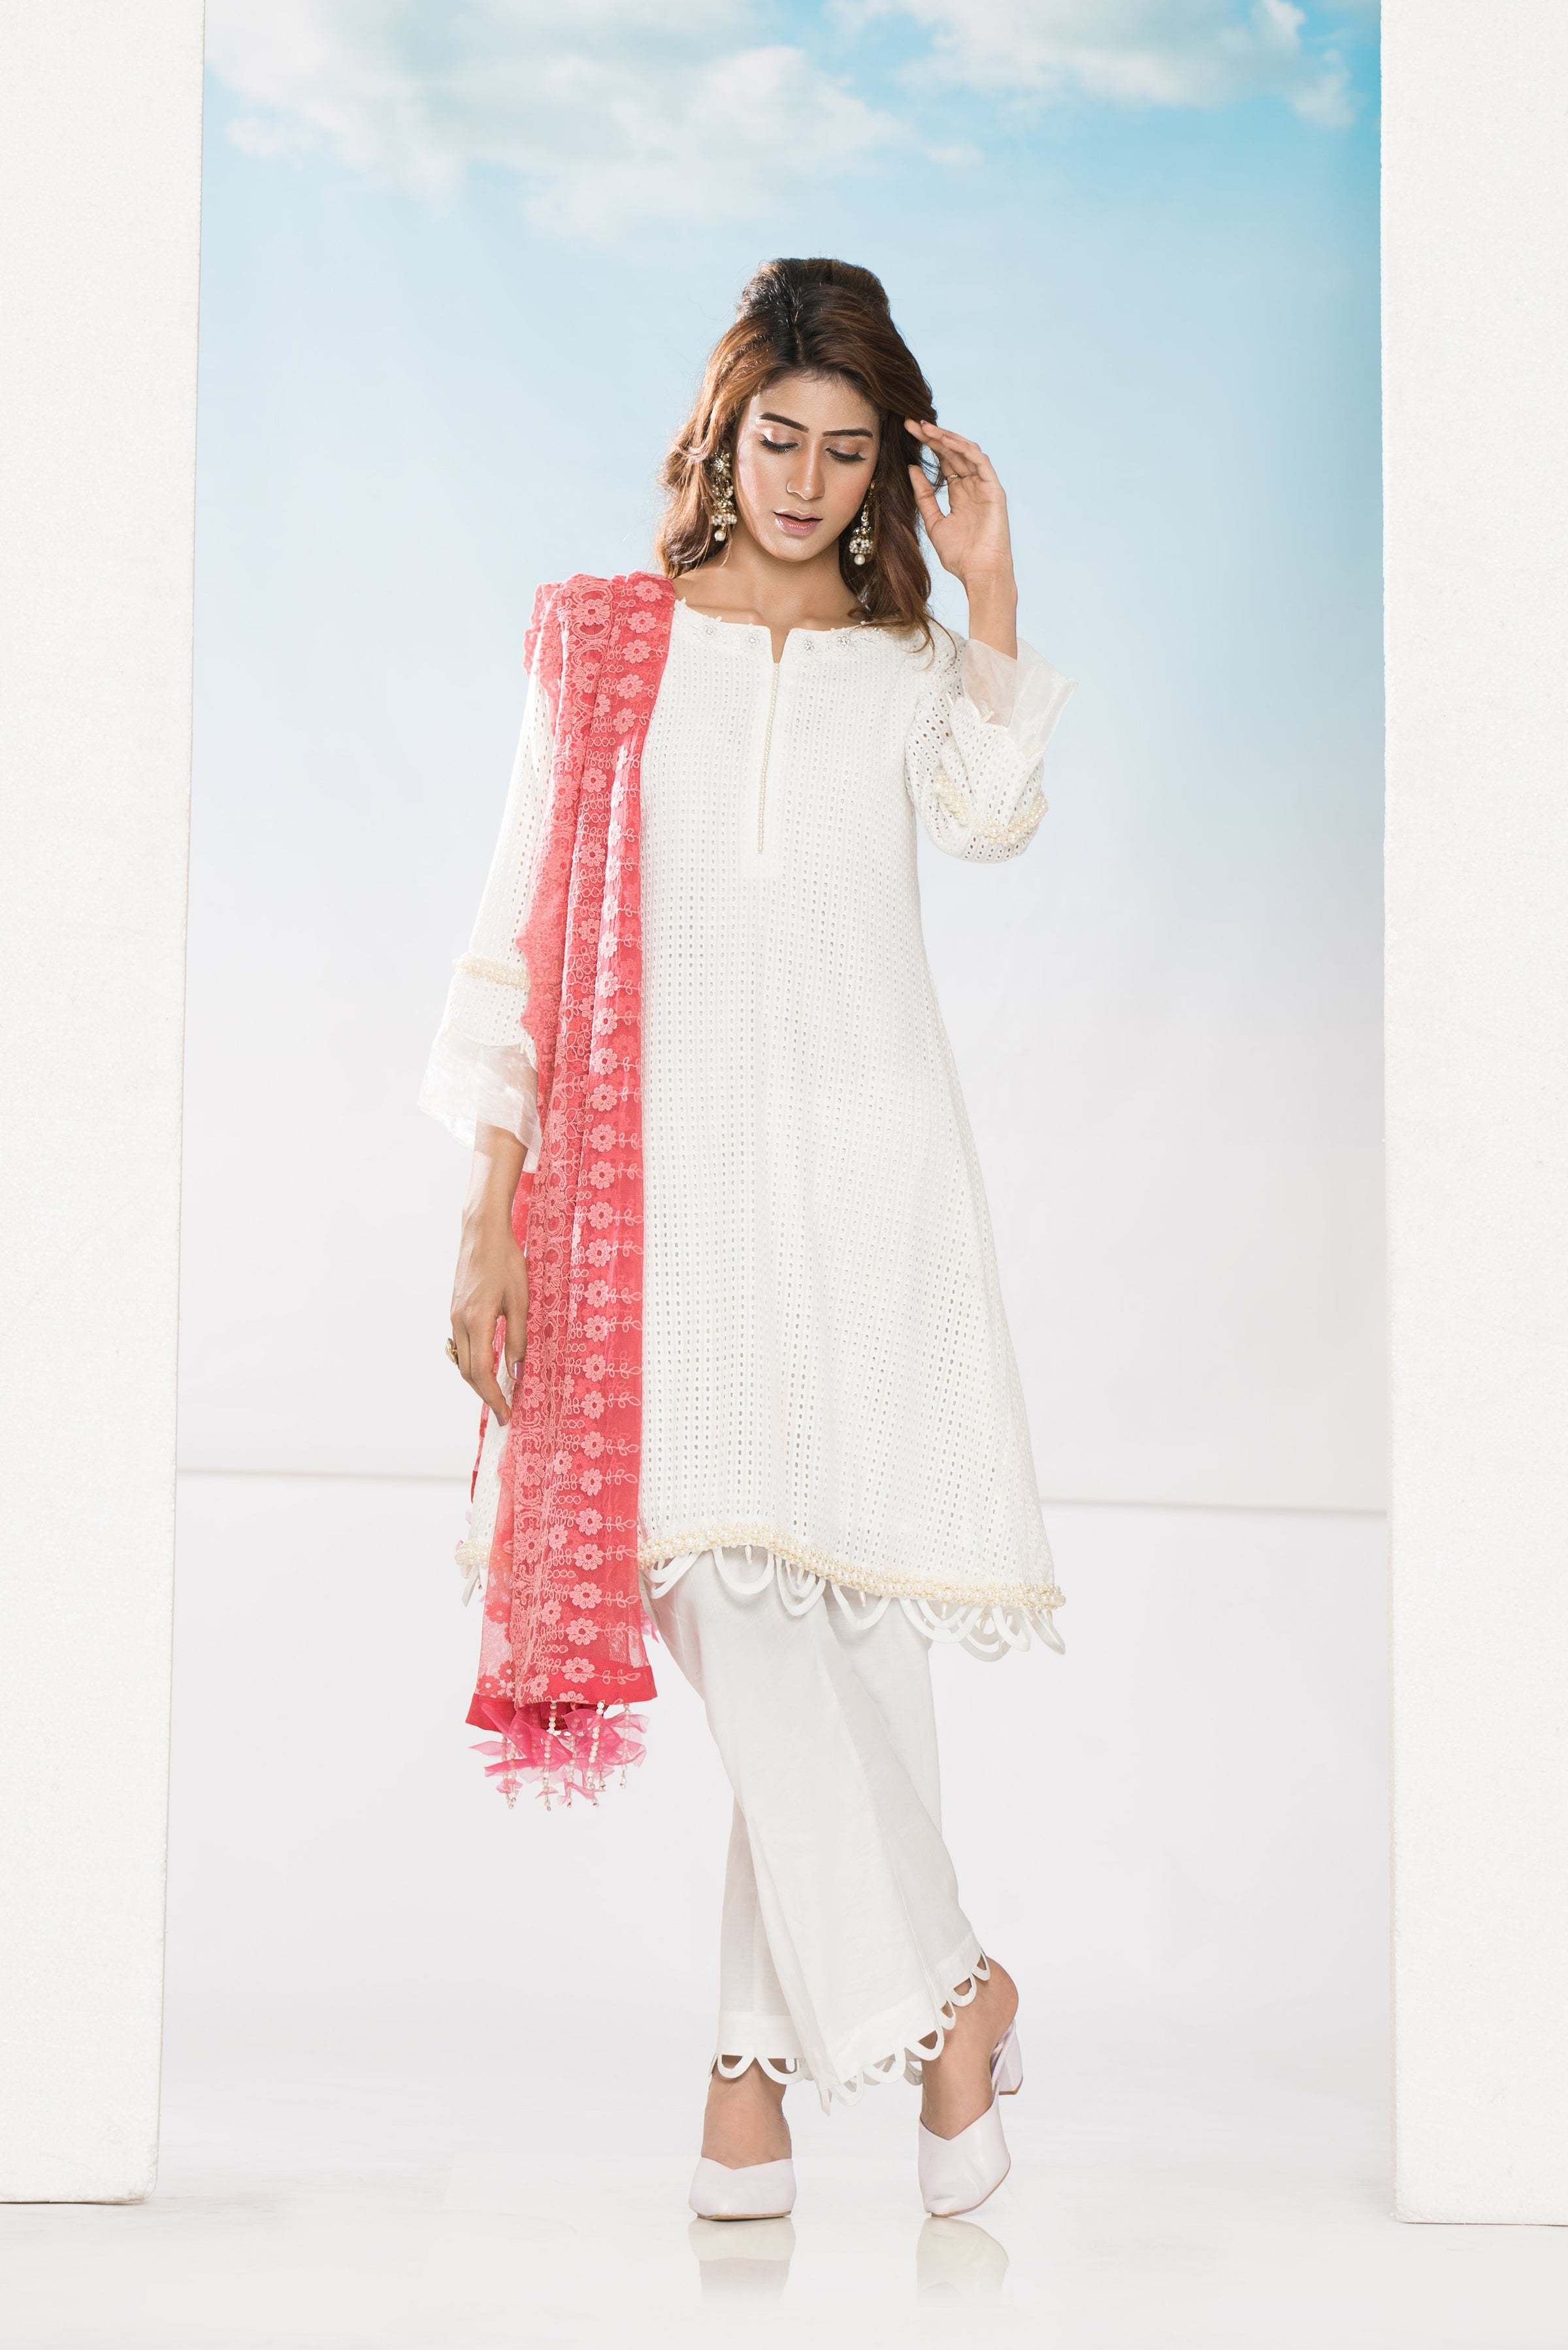 white dress designs pakistani